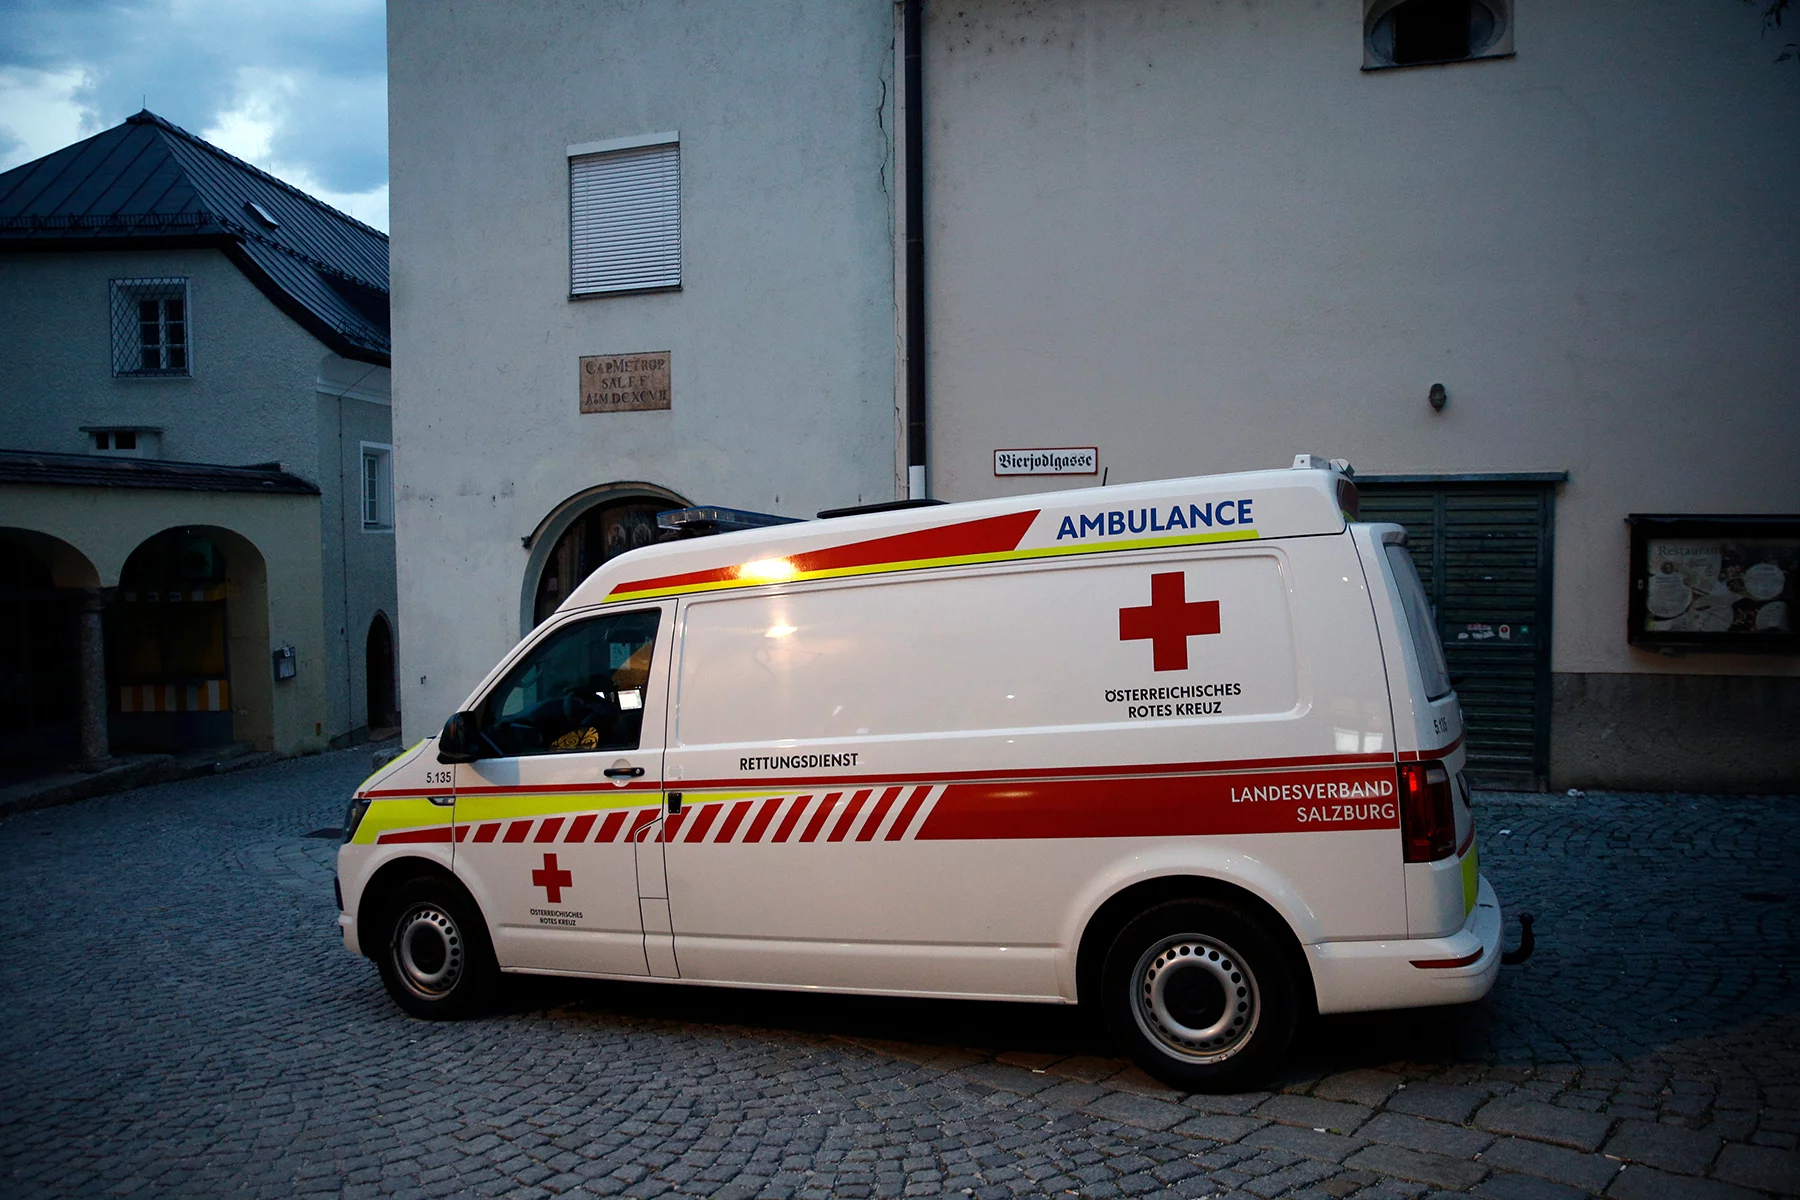 An ambulance in Salzburg, Austria